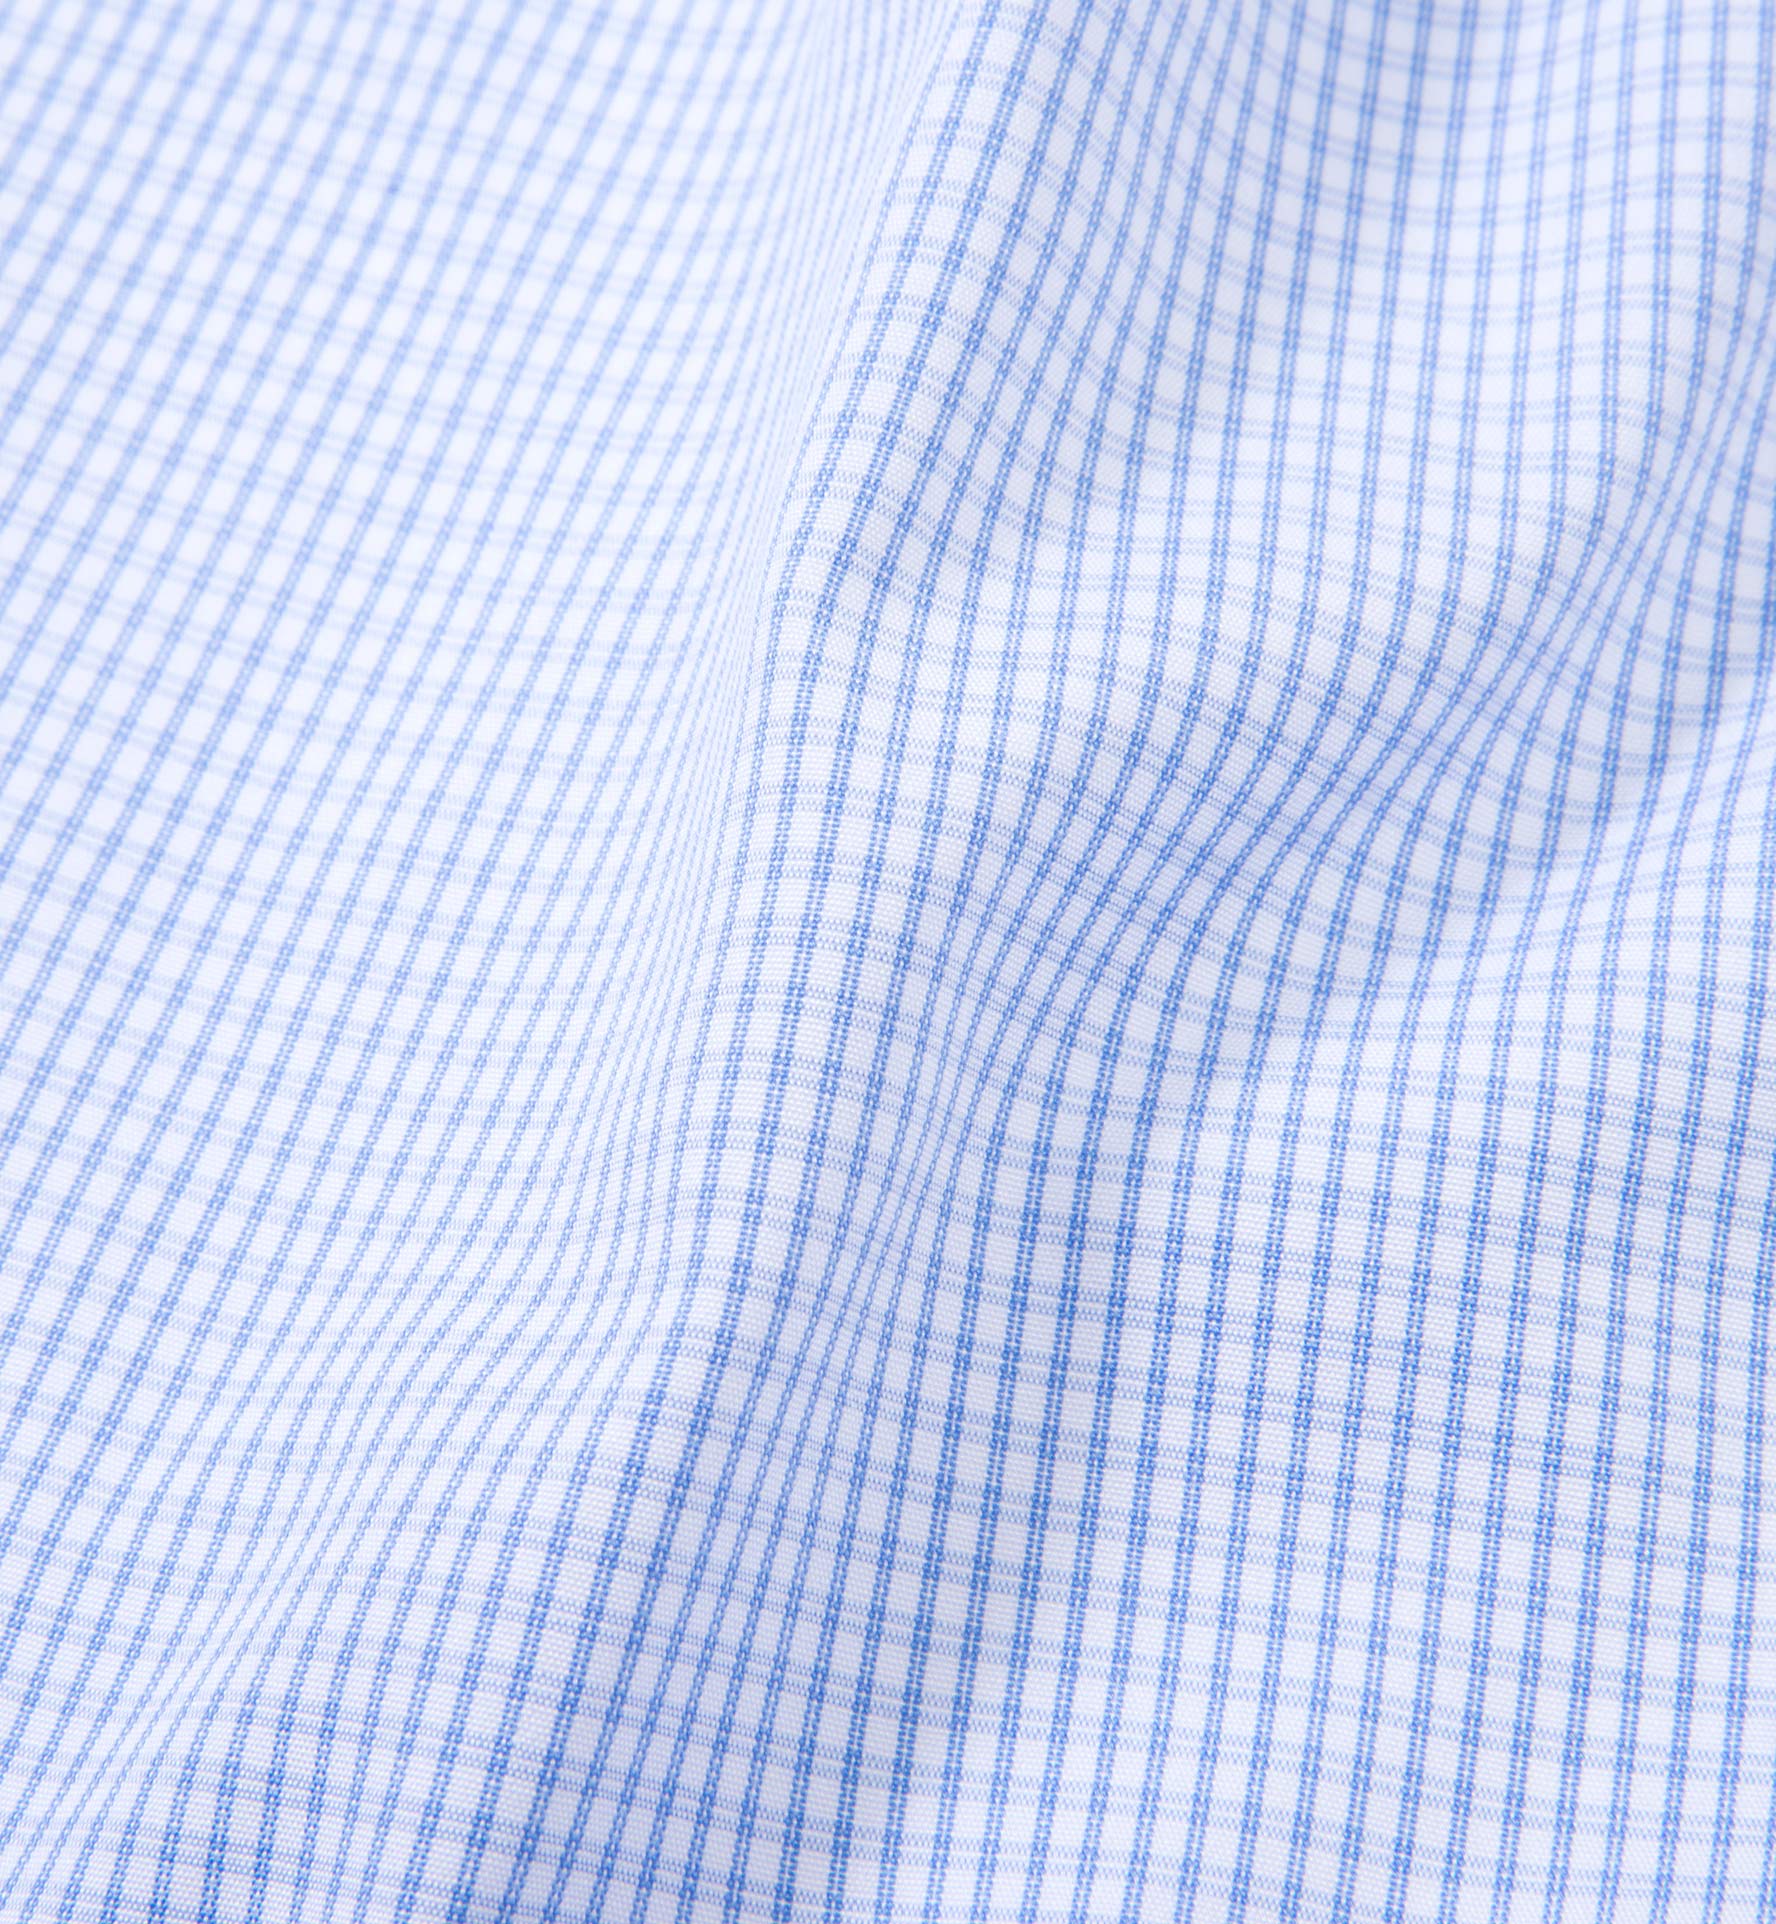 Canclini Light Blue Multi-Check Shirts by Proper Cloth